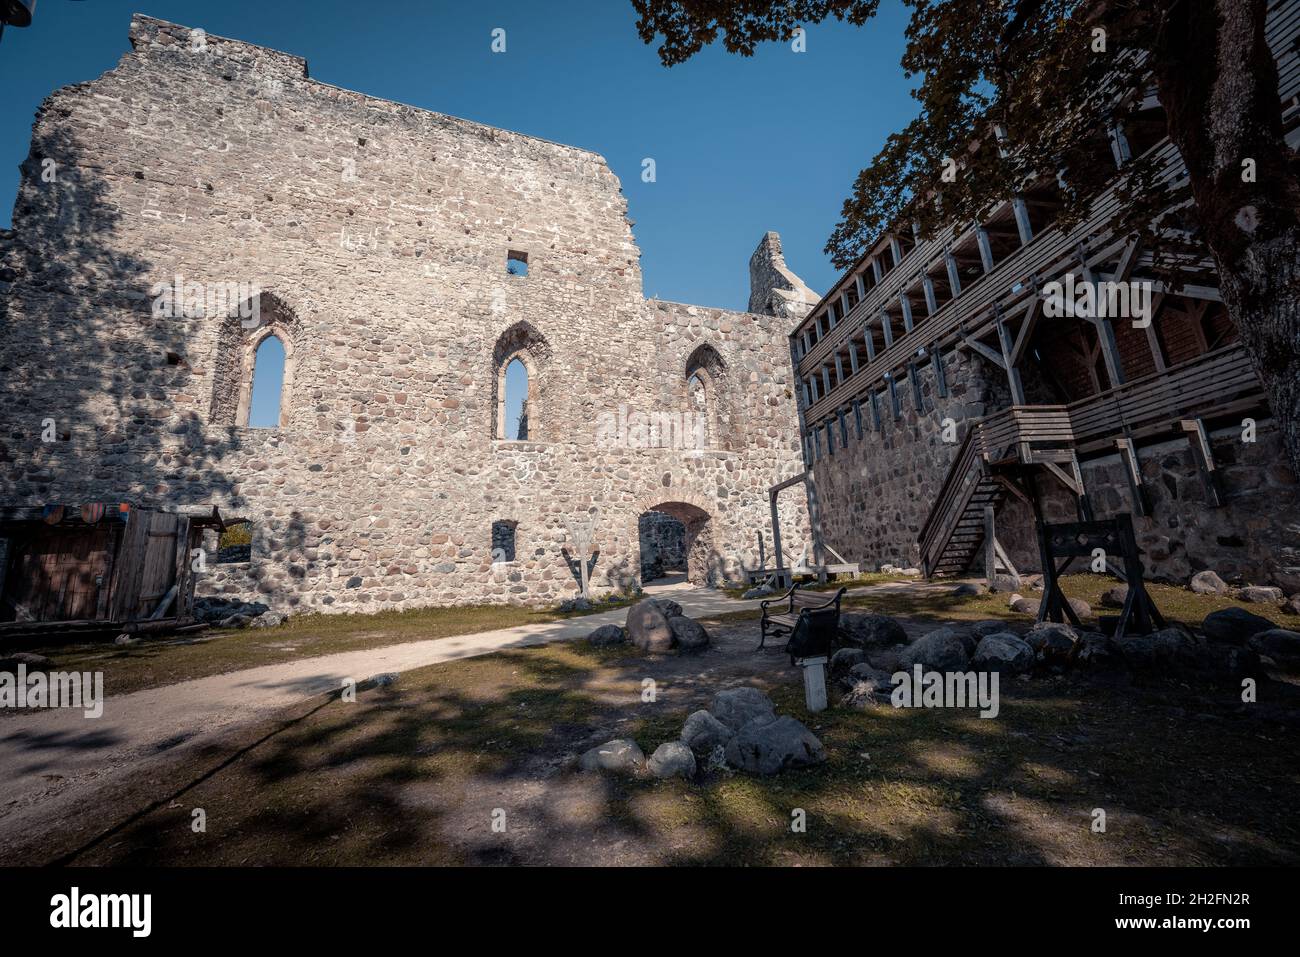 Sigulda Medieval Castle Ruins - Castle of the Livonian Order - Sigulda, Latvia Stock Photo